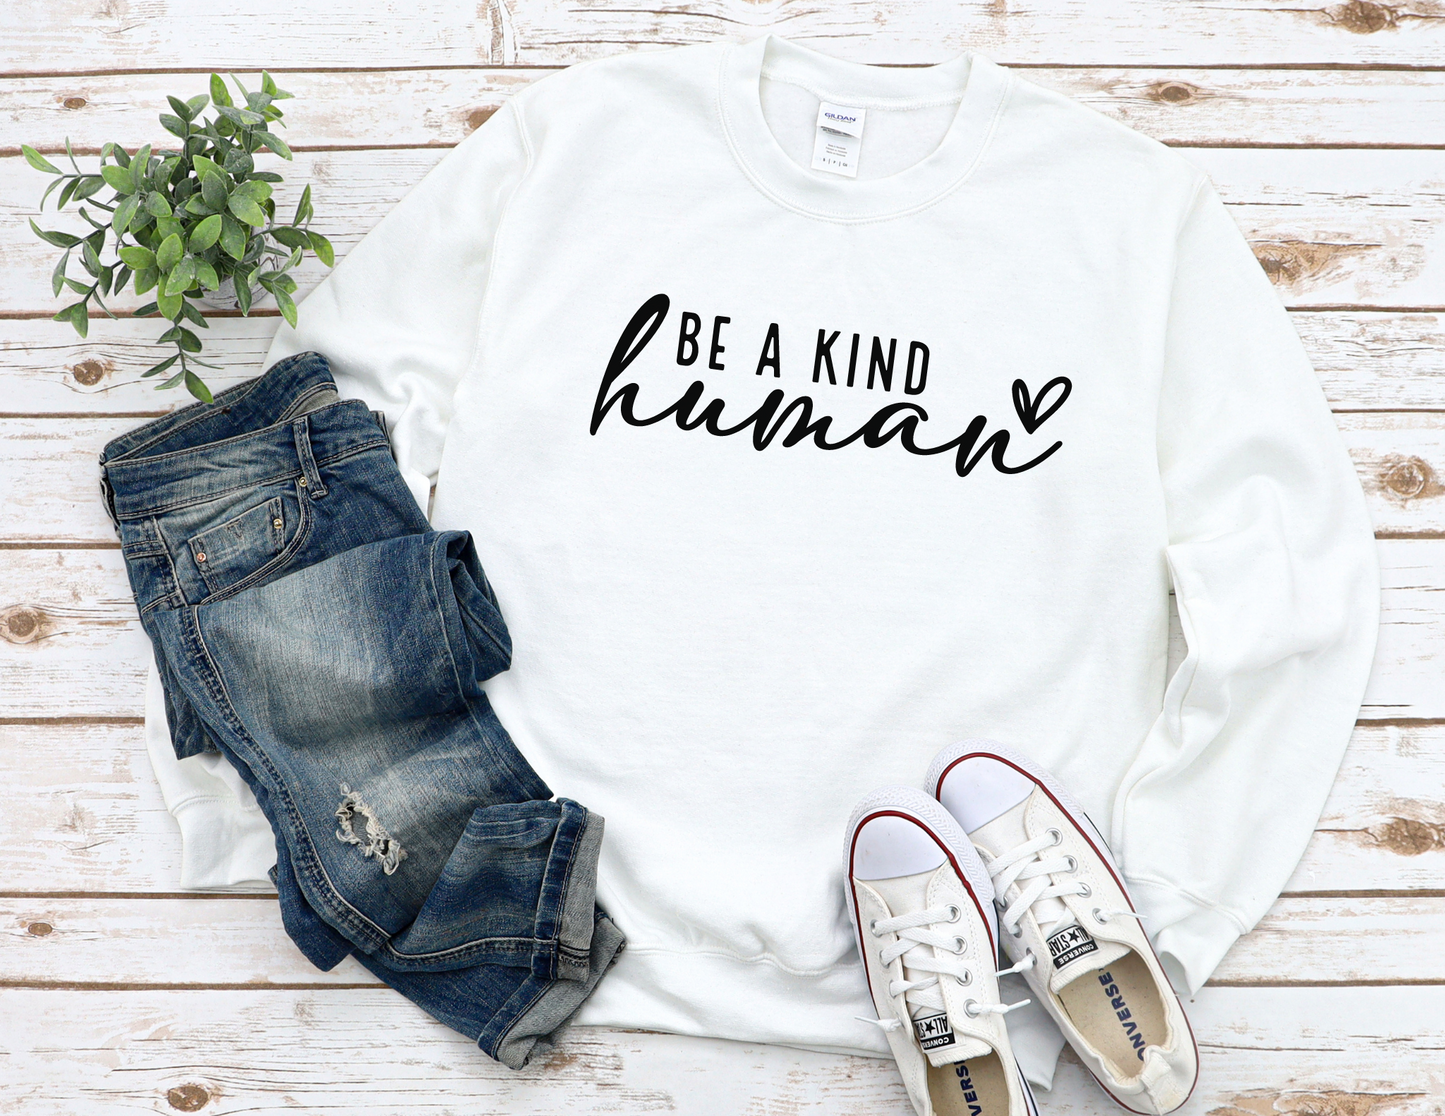 Be a Kind Human Sweater